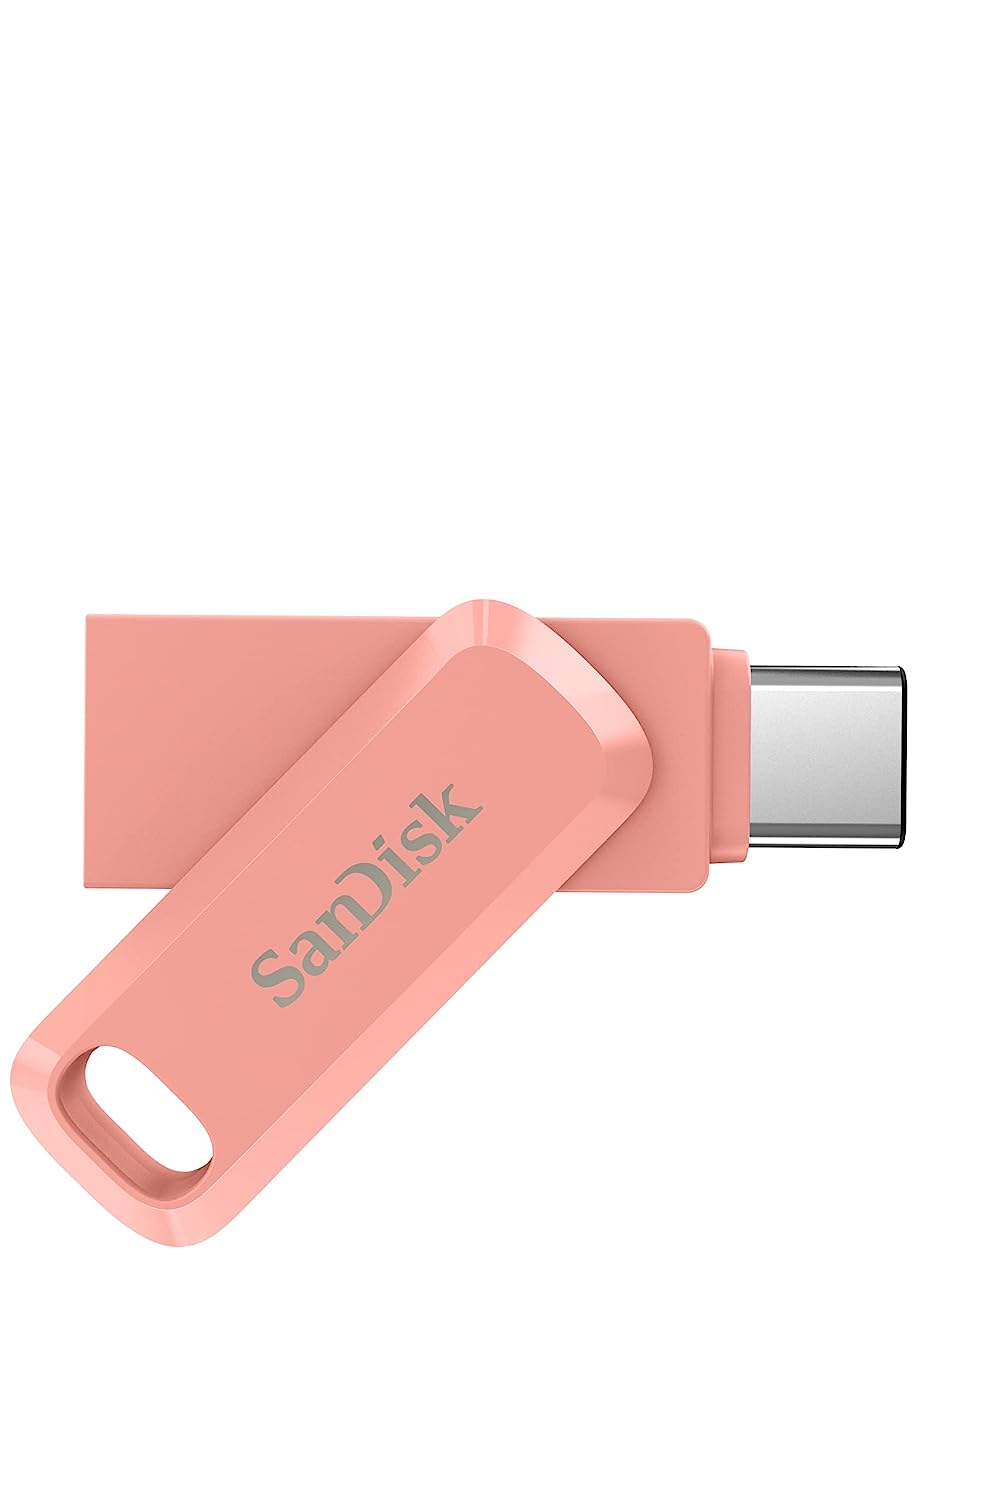 SanDisk Ultra Dual Drive Go USB 3.0 Type C Flash Drive, Peach